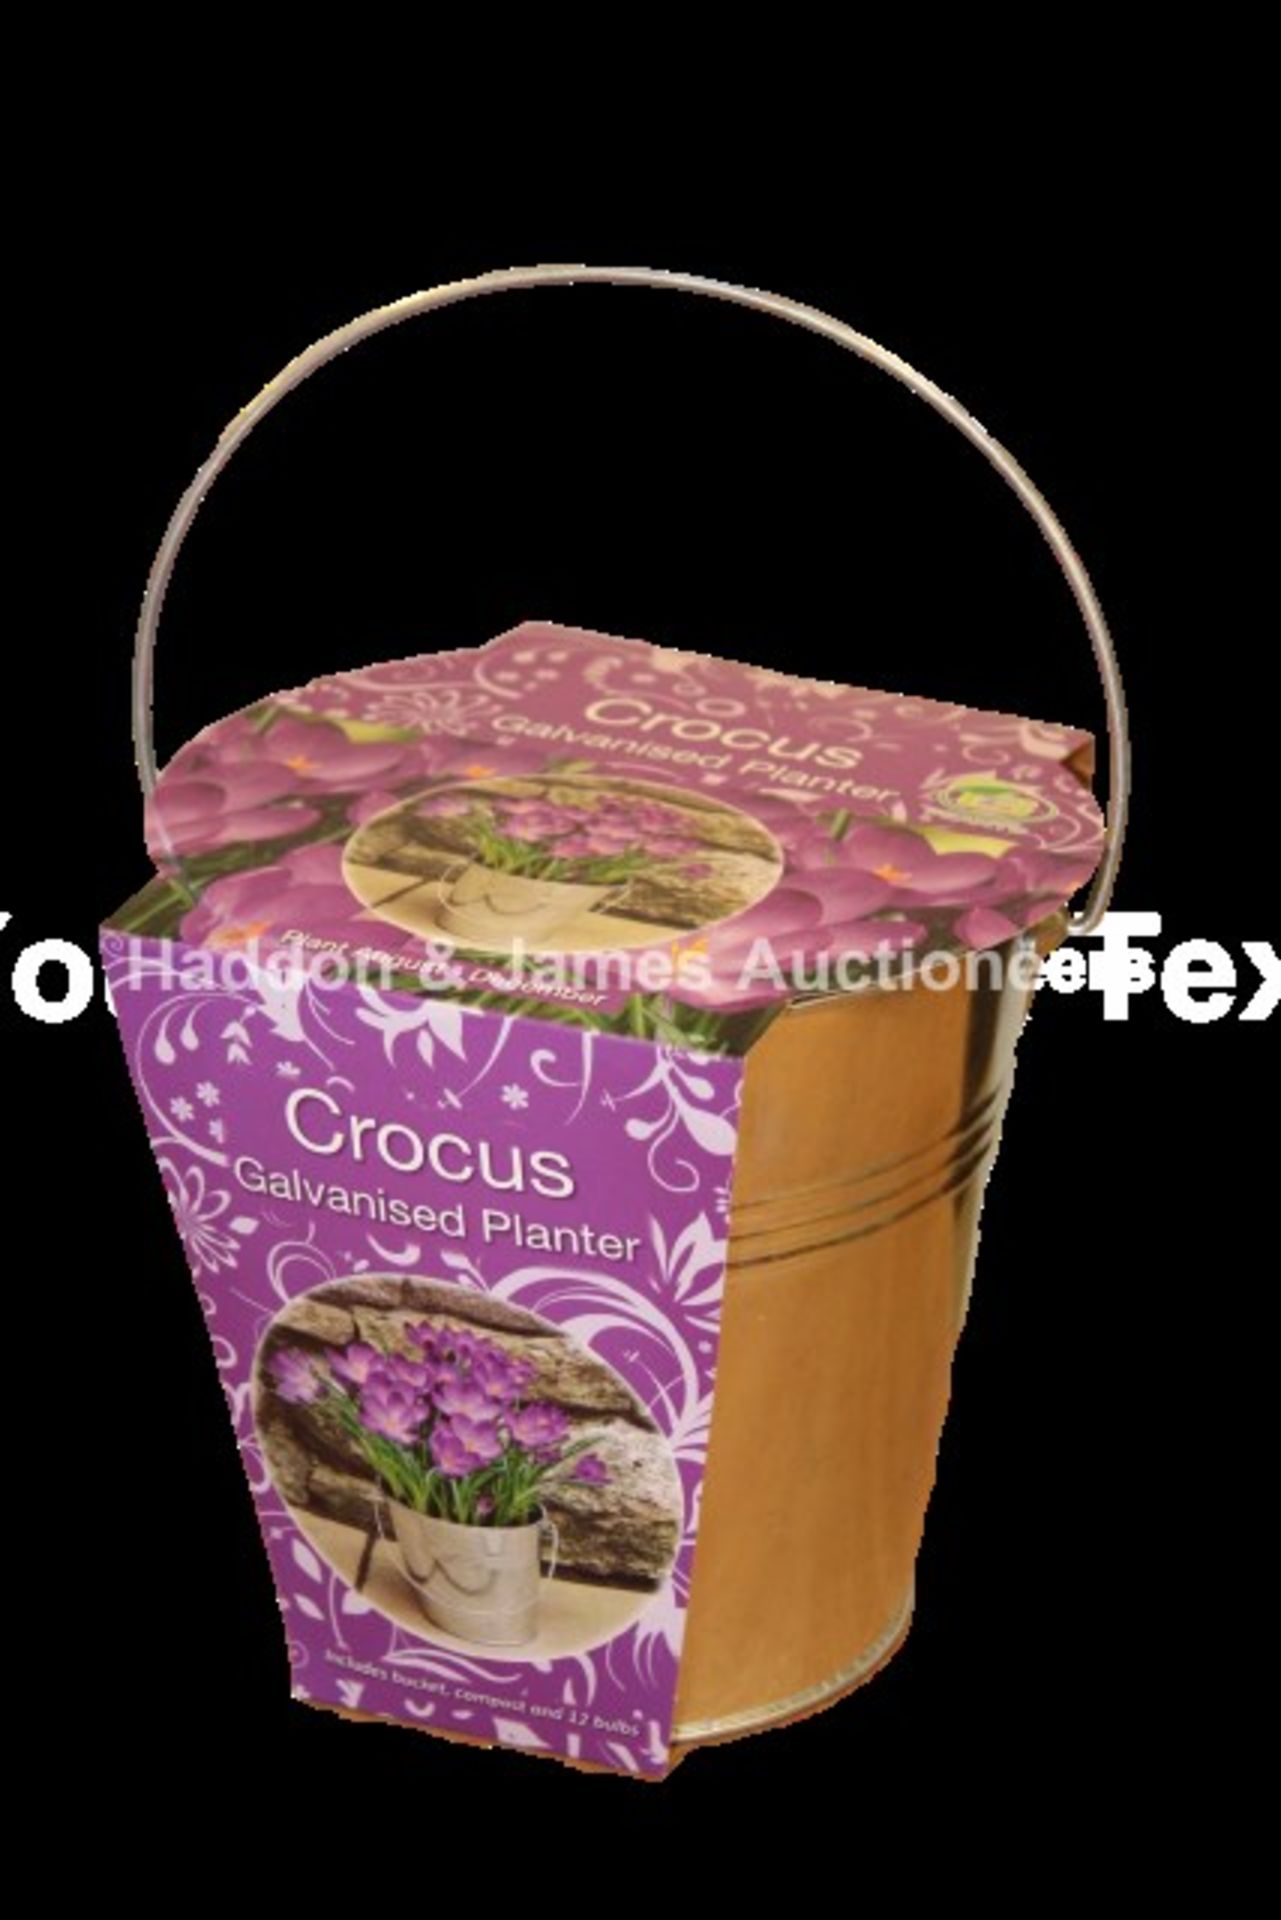 V *TRADE QTY* Brand New Crocus 12 Bulb Galvanised Bucket Gift Set Includes 12 Bulbs, Bucket